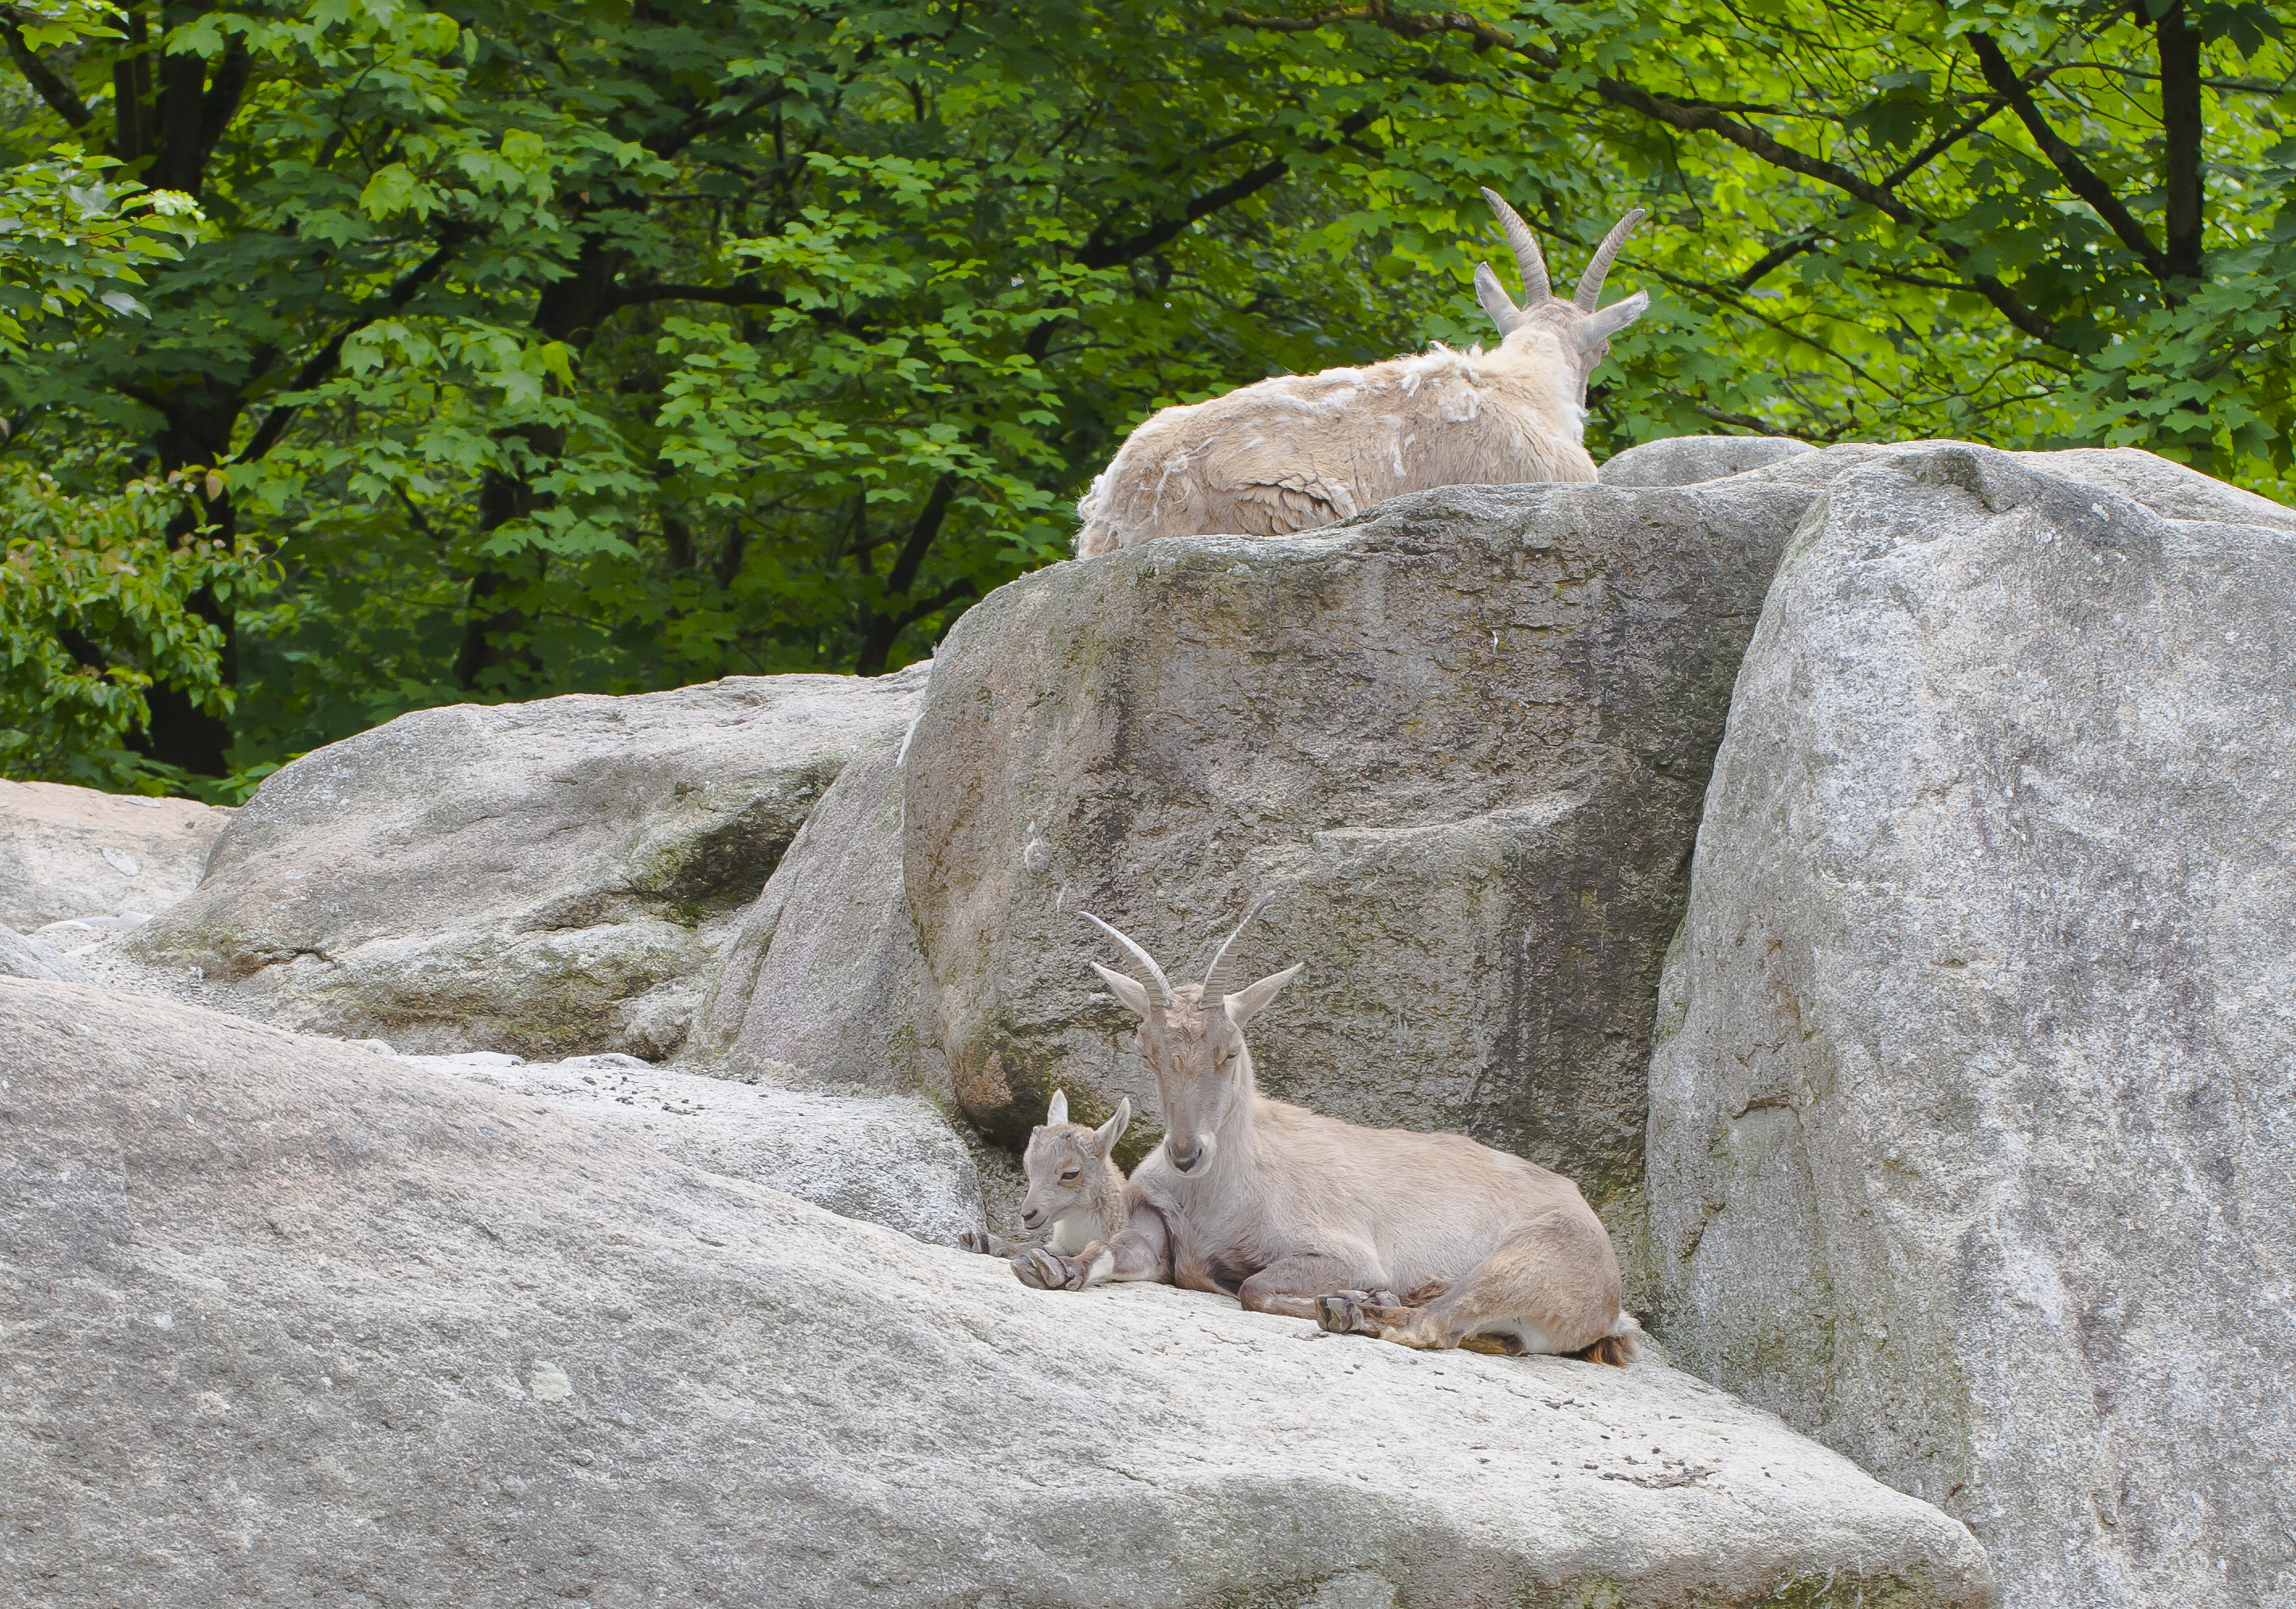 Íbice (Capra ibex ibex), Tierpark Hellabrunn, Múnich, Alemania, 2012-06-17, DD 01